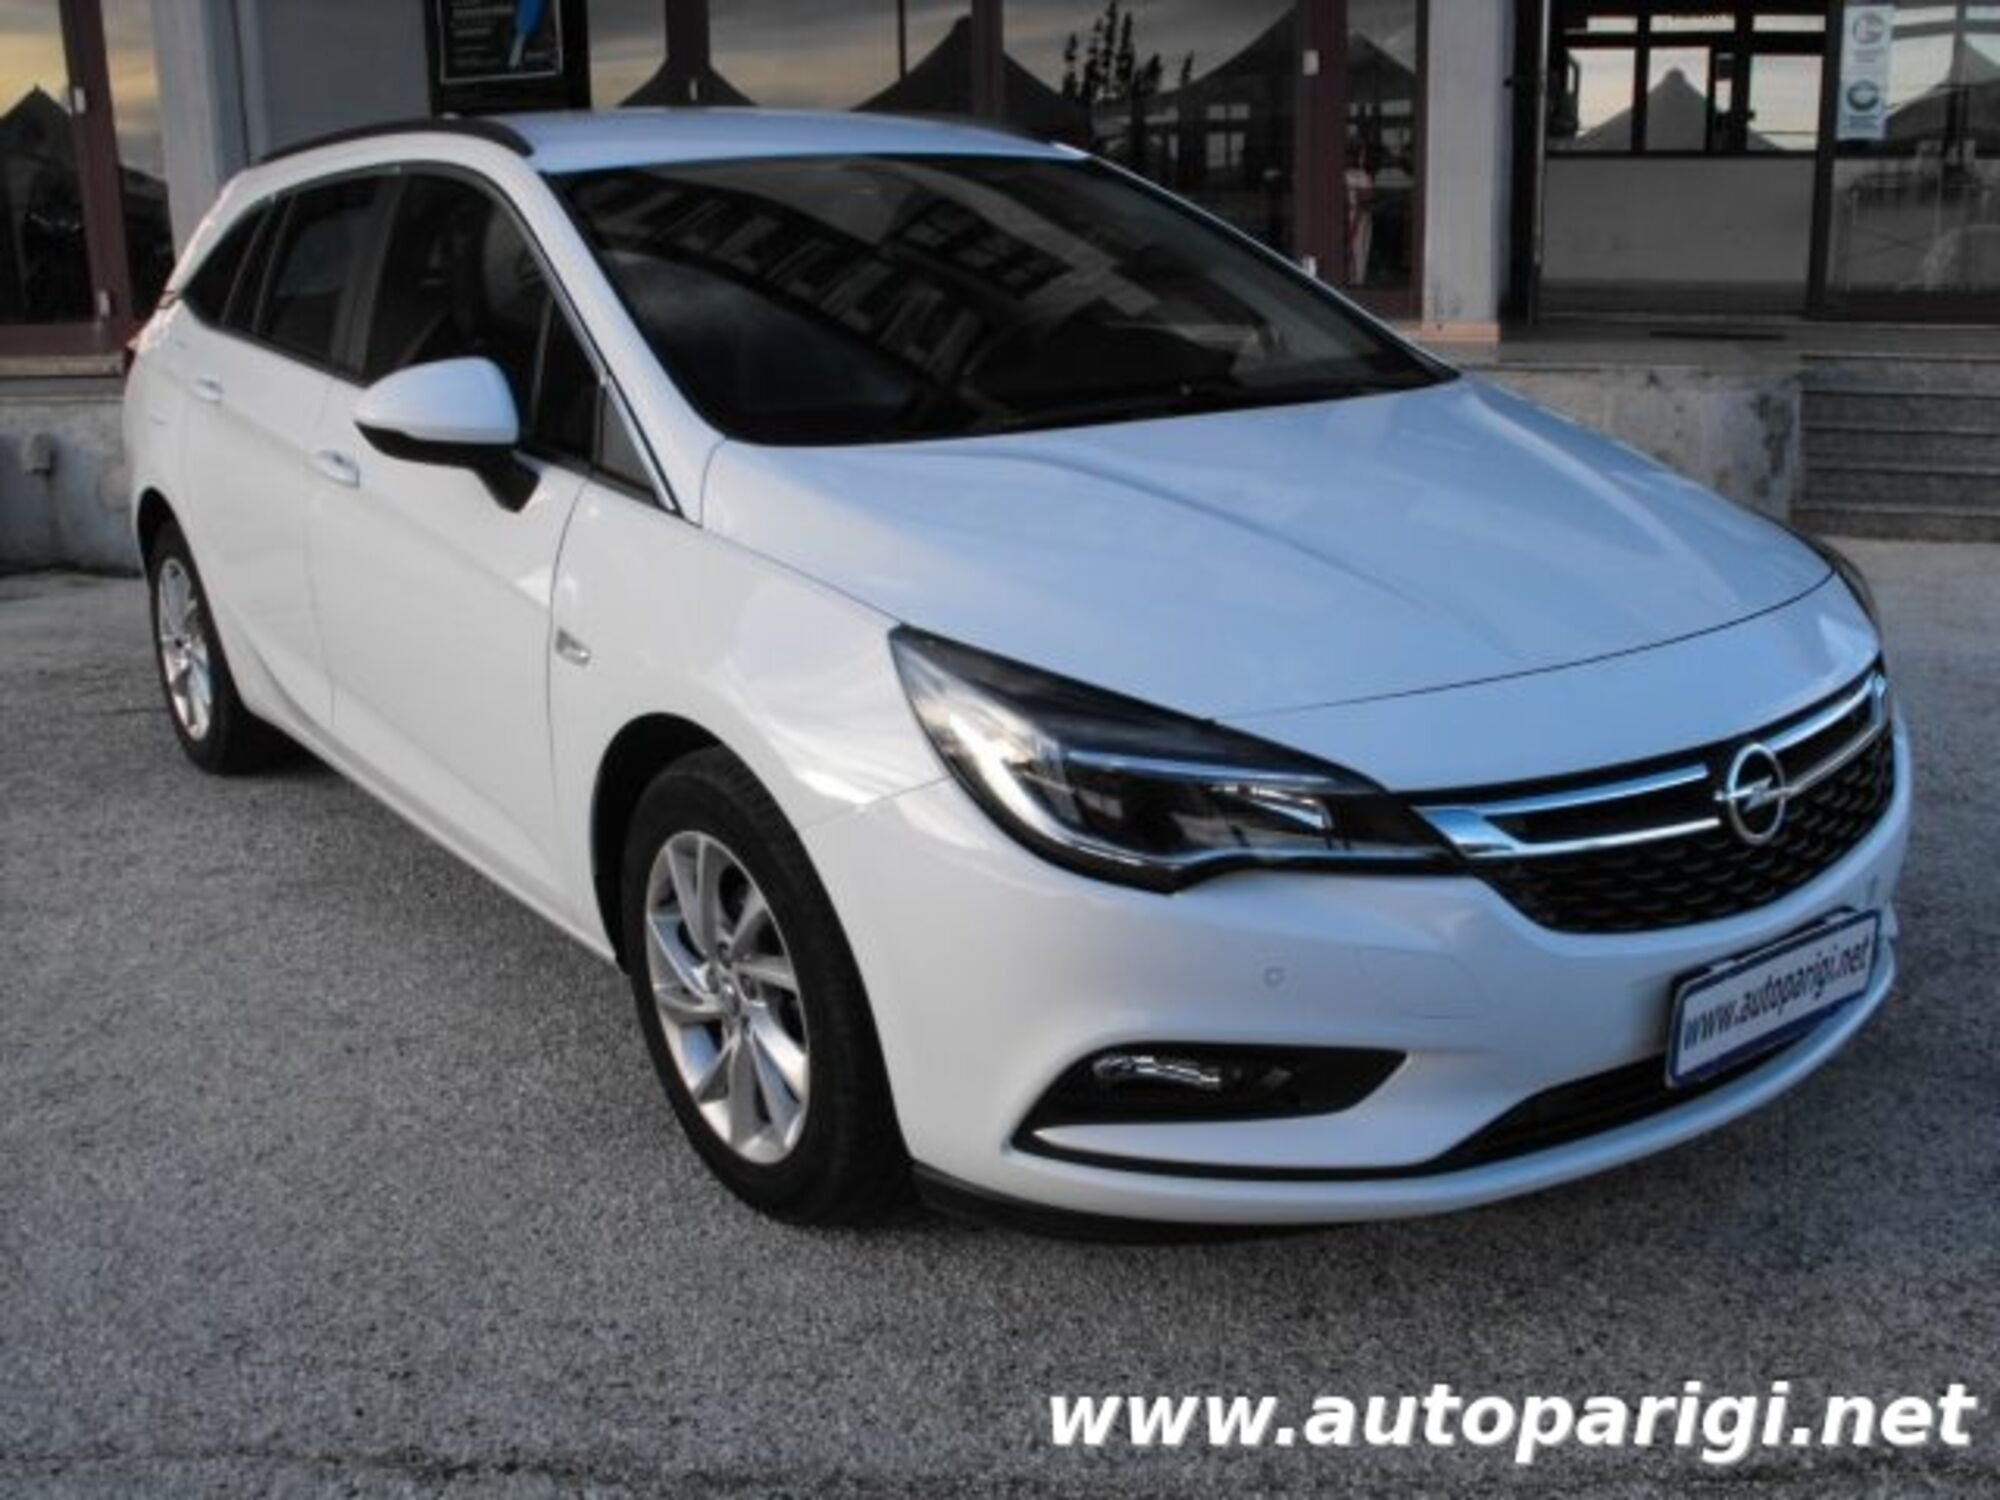 Opel Astra Station Wagon 1.6 CDTi 110CV Start&Stop Sports Business usato